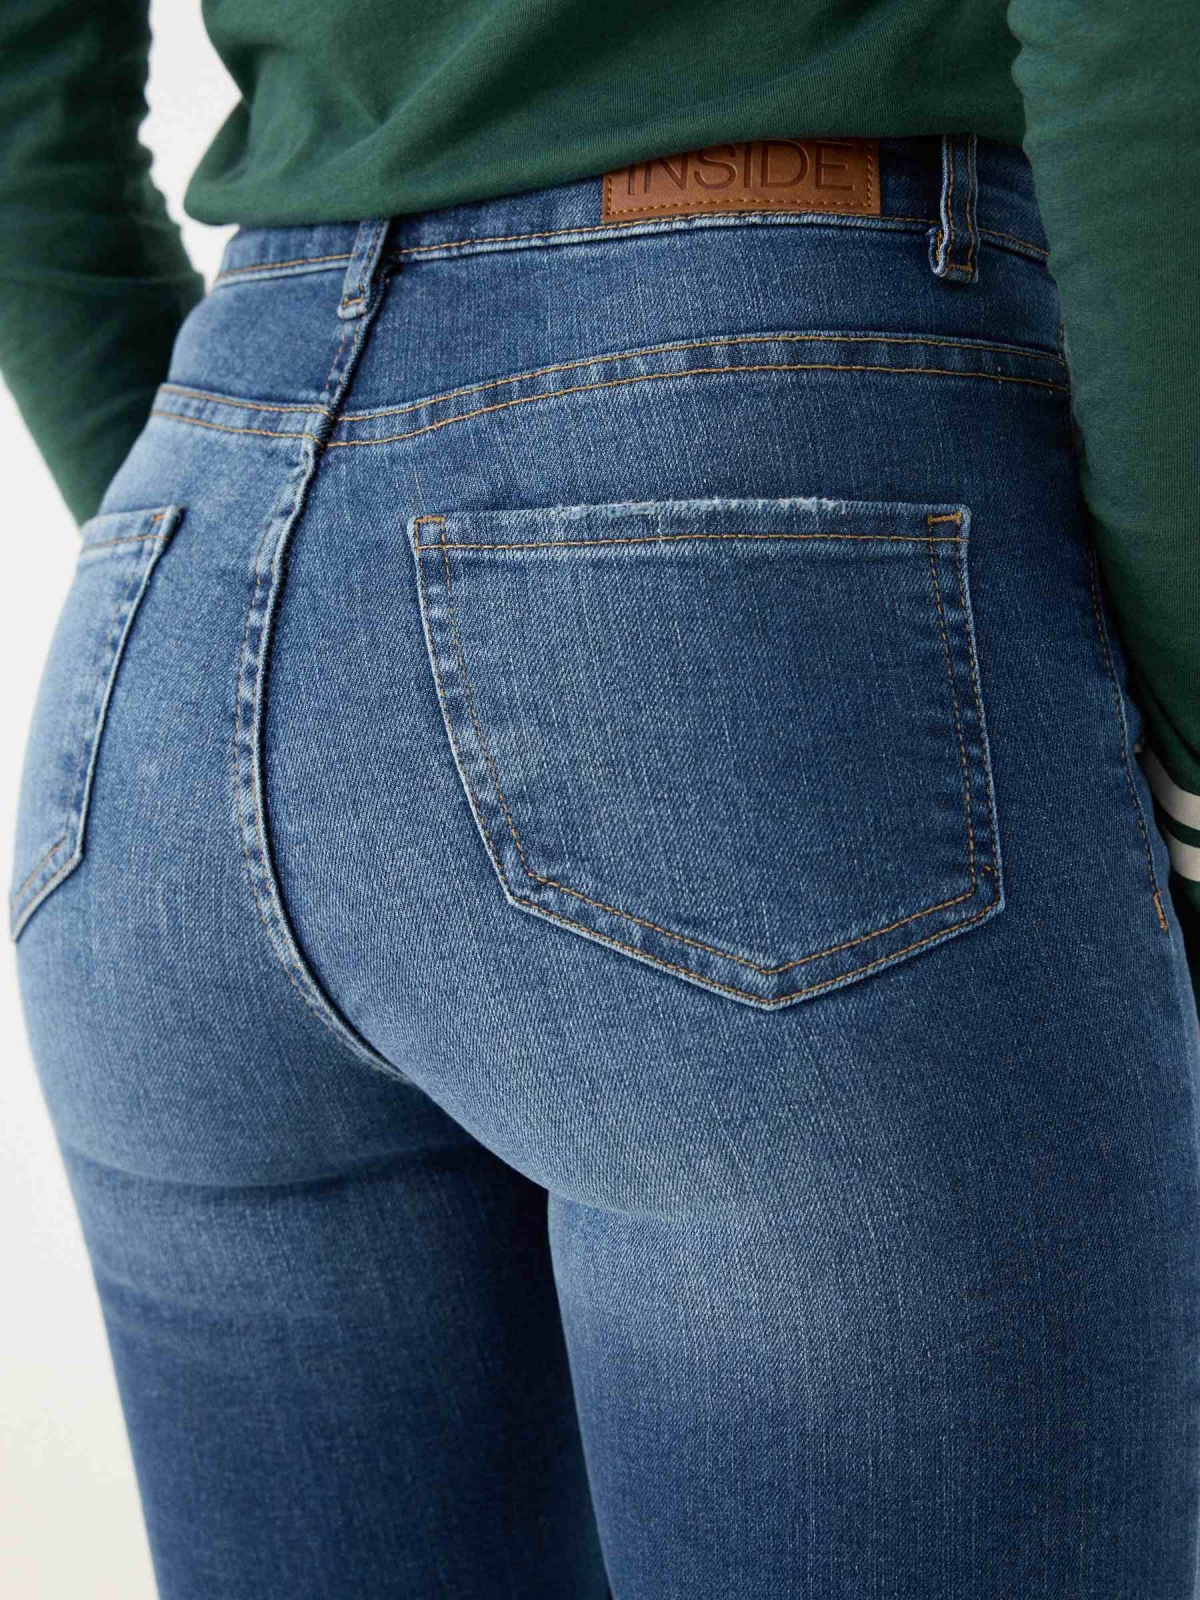 Jeans skinny tiro alto efecto lavado azul marino vista detalle